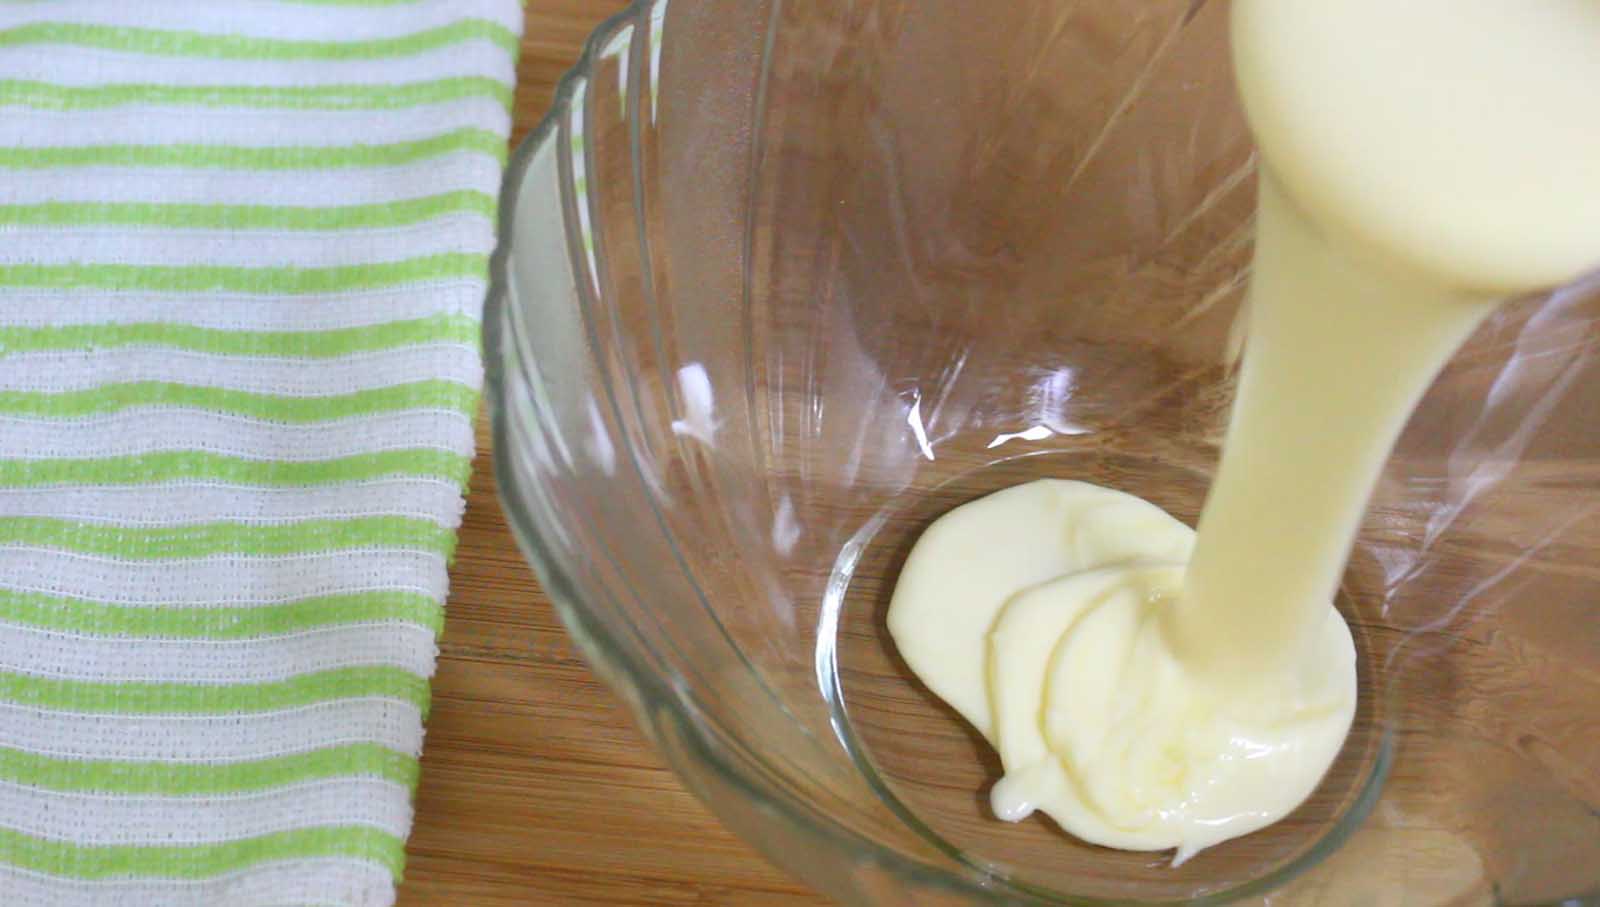 1 add condensed milk to butter